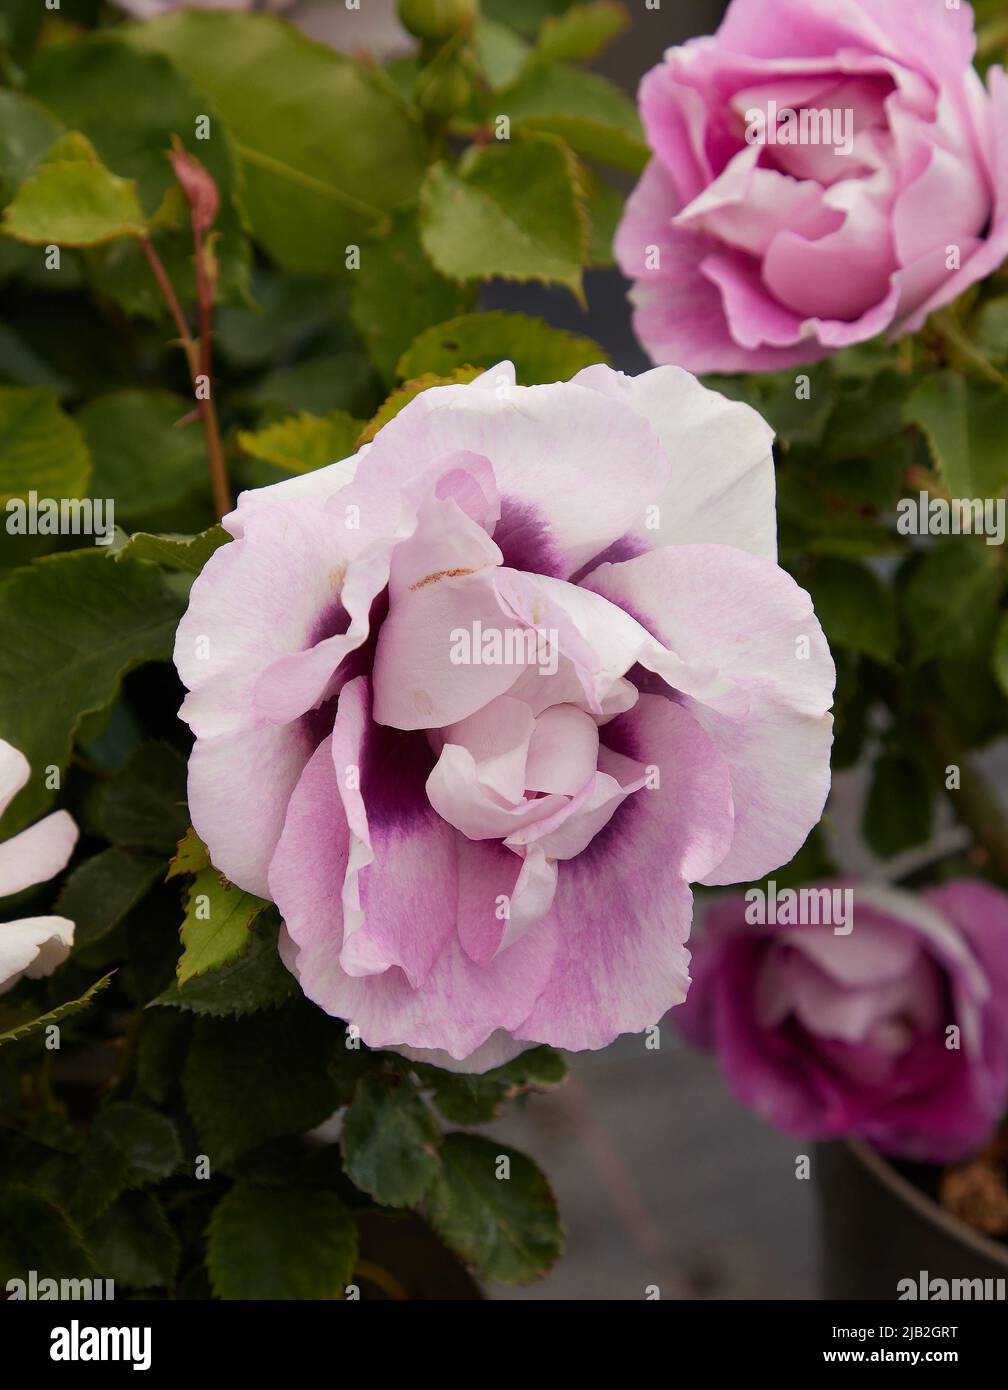 Close up of Rosa Eyes for You, a Floribunda Rose, seen outdoors in the garden. Stock Photo